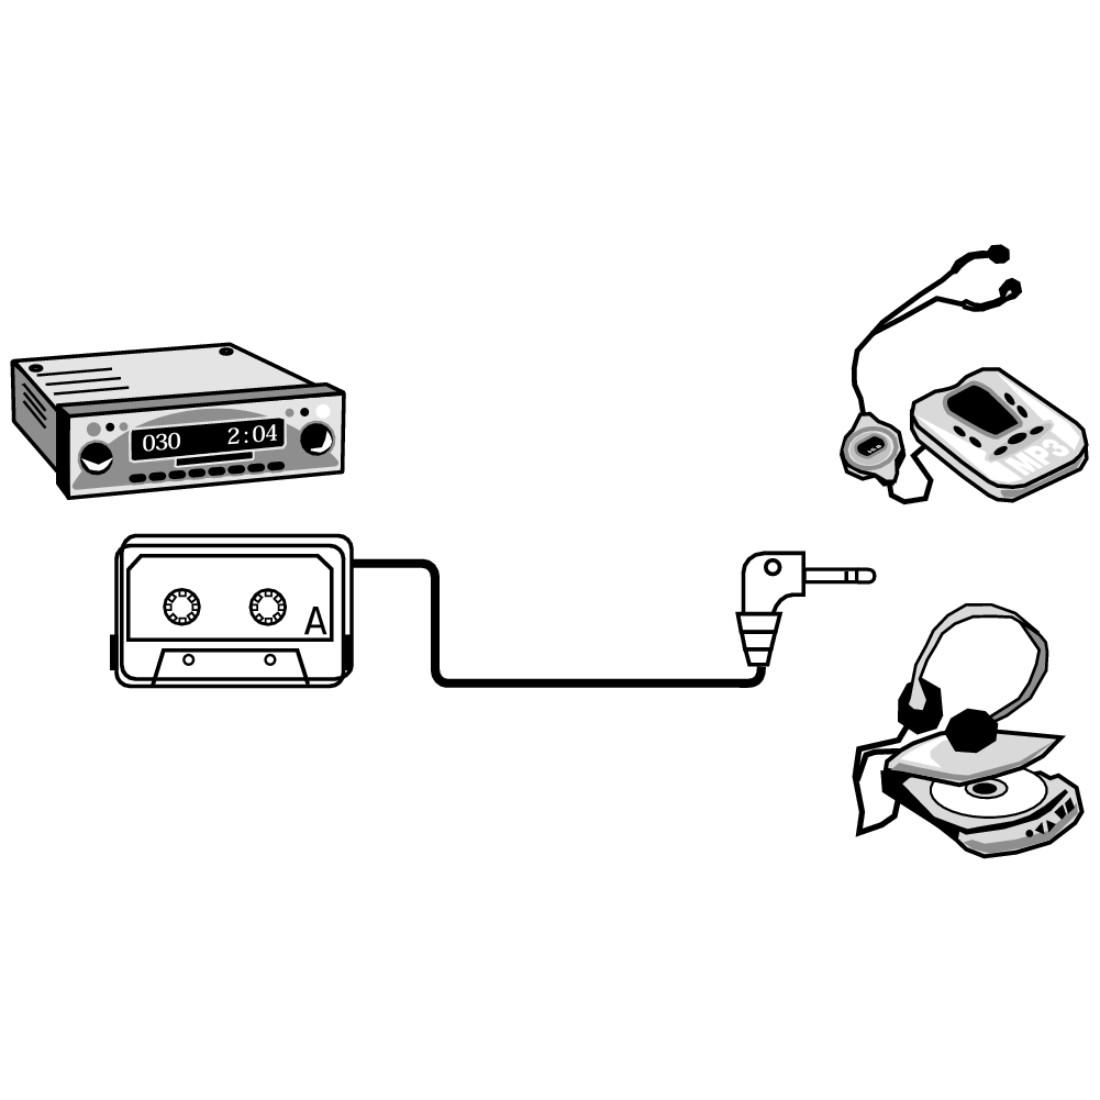 Q-Sonic Adapterkassette: CD/MP3-Kassetten-Adapter für Kfz-Betrieb